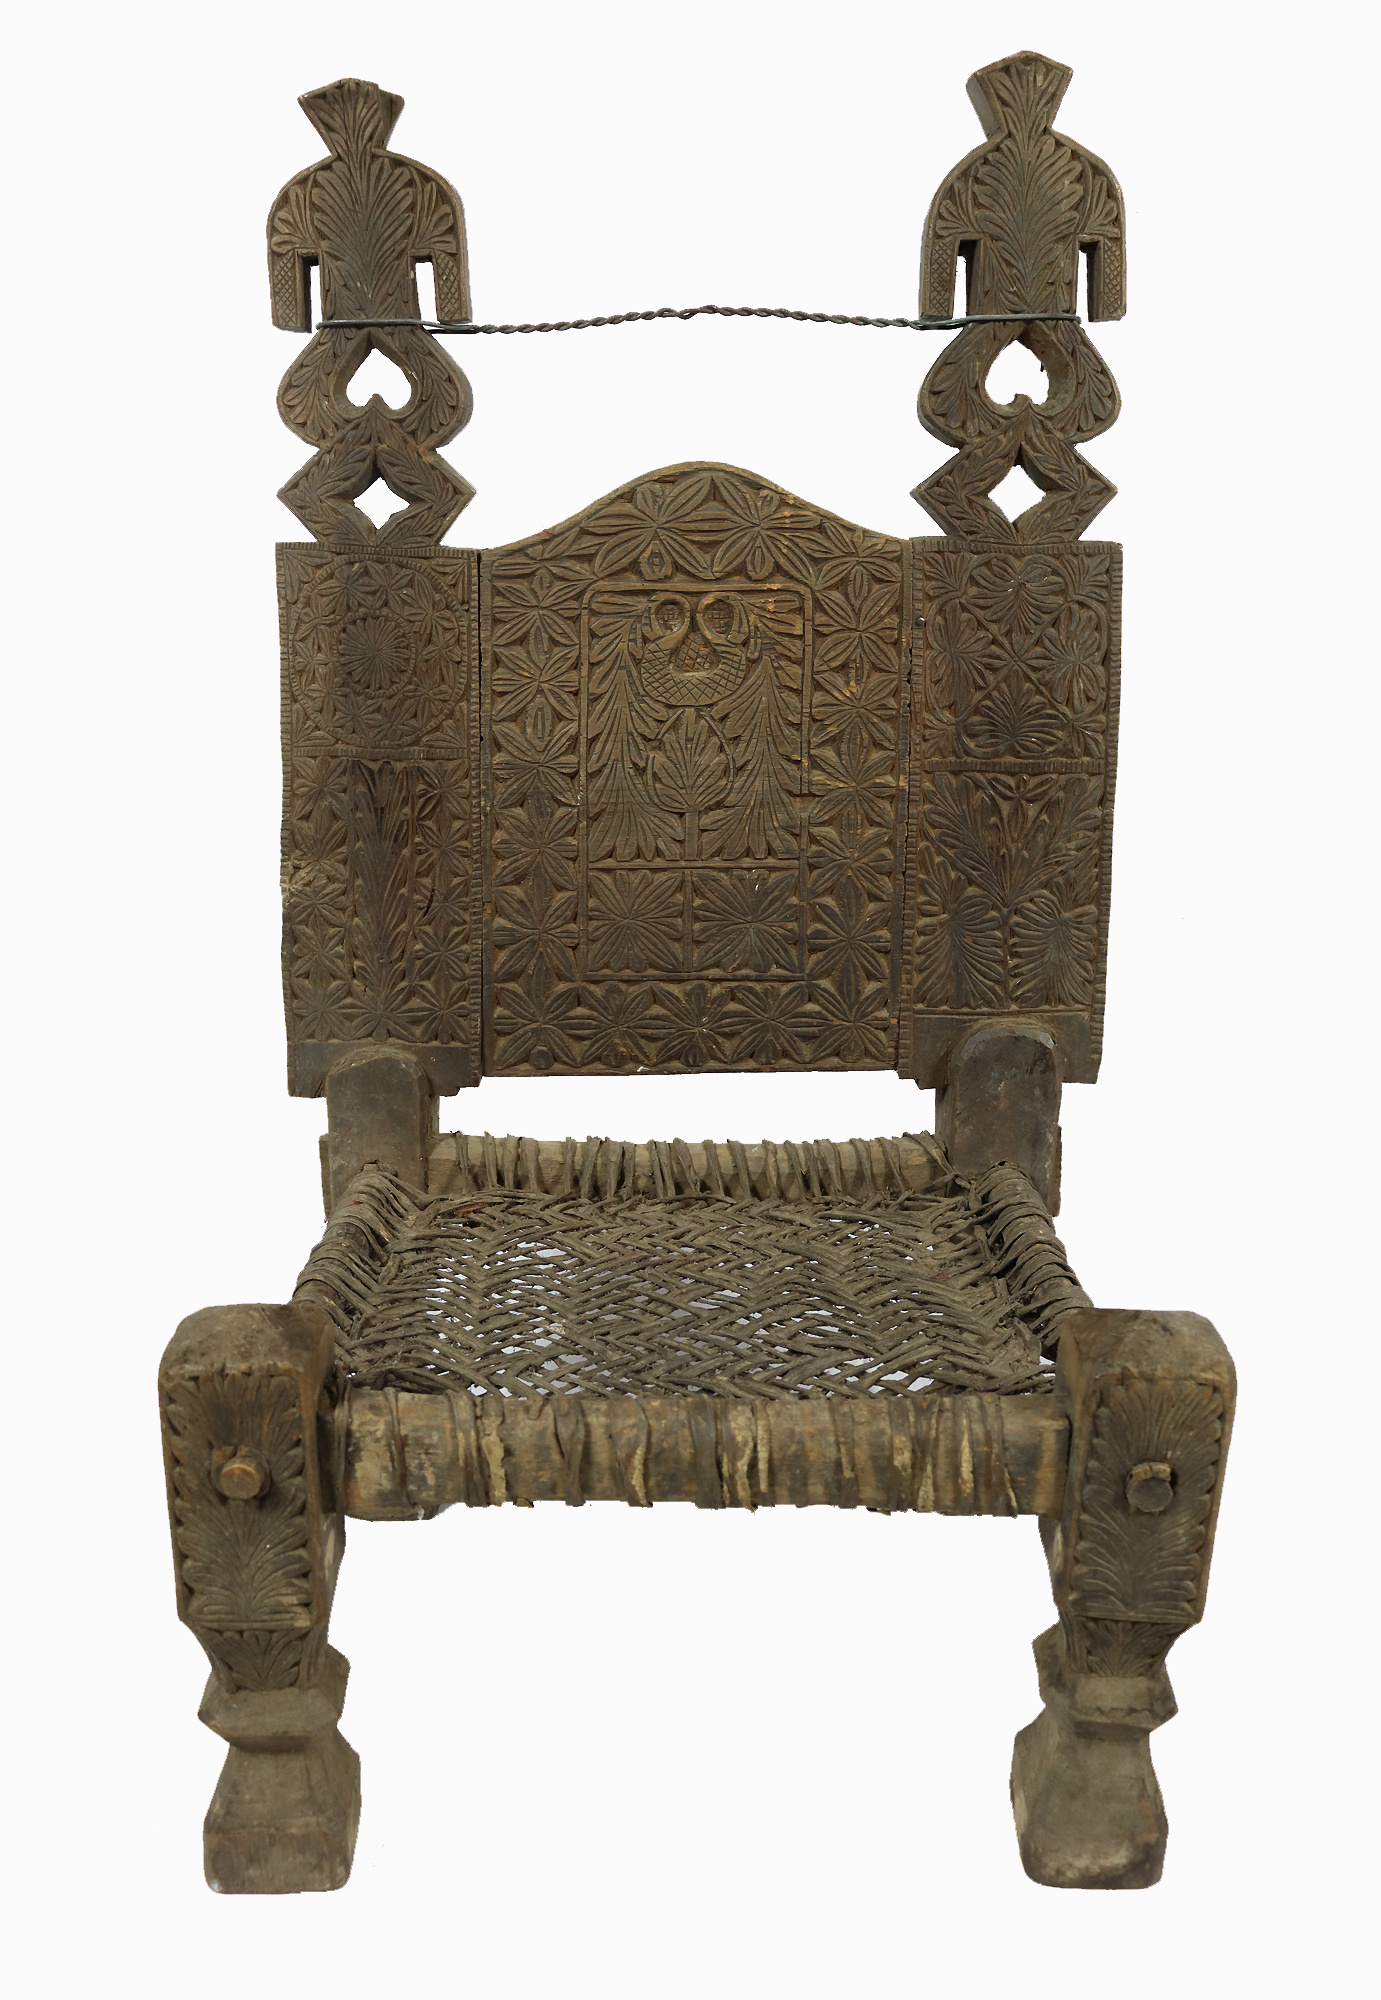 antique  cedar wood Low Chair from Nuristan Afghanistan / Swat Valley-Pakistan No-22 - H